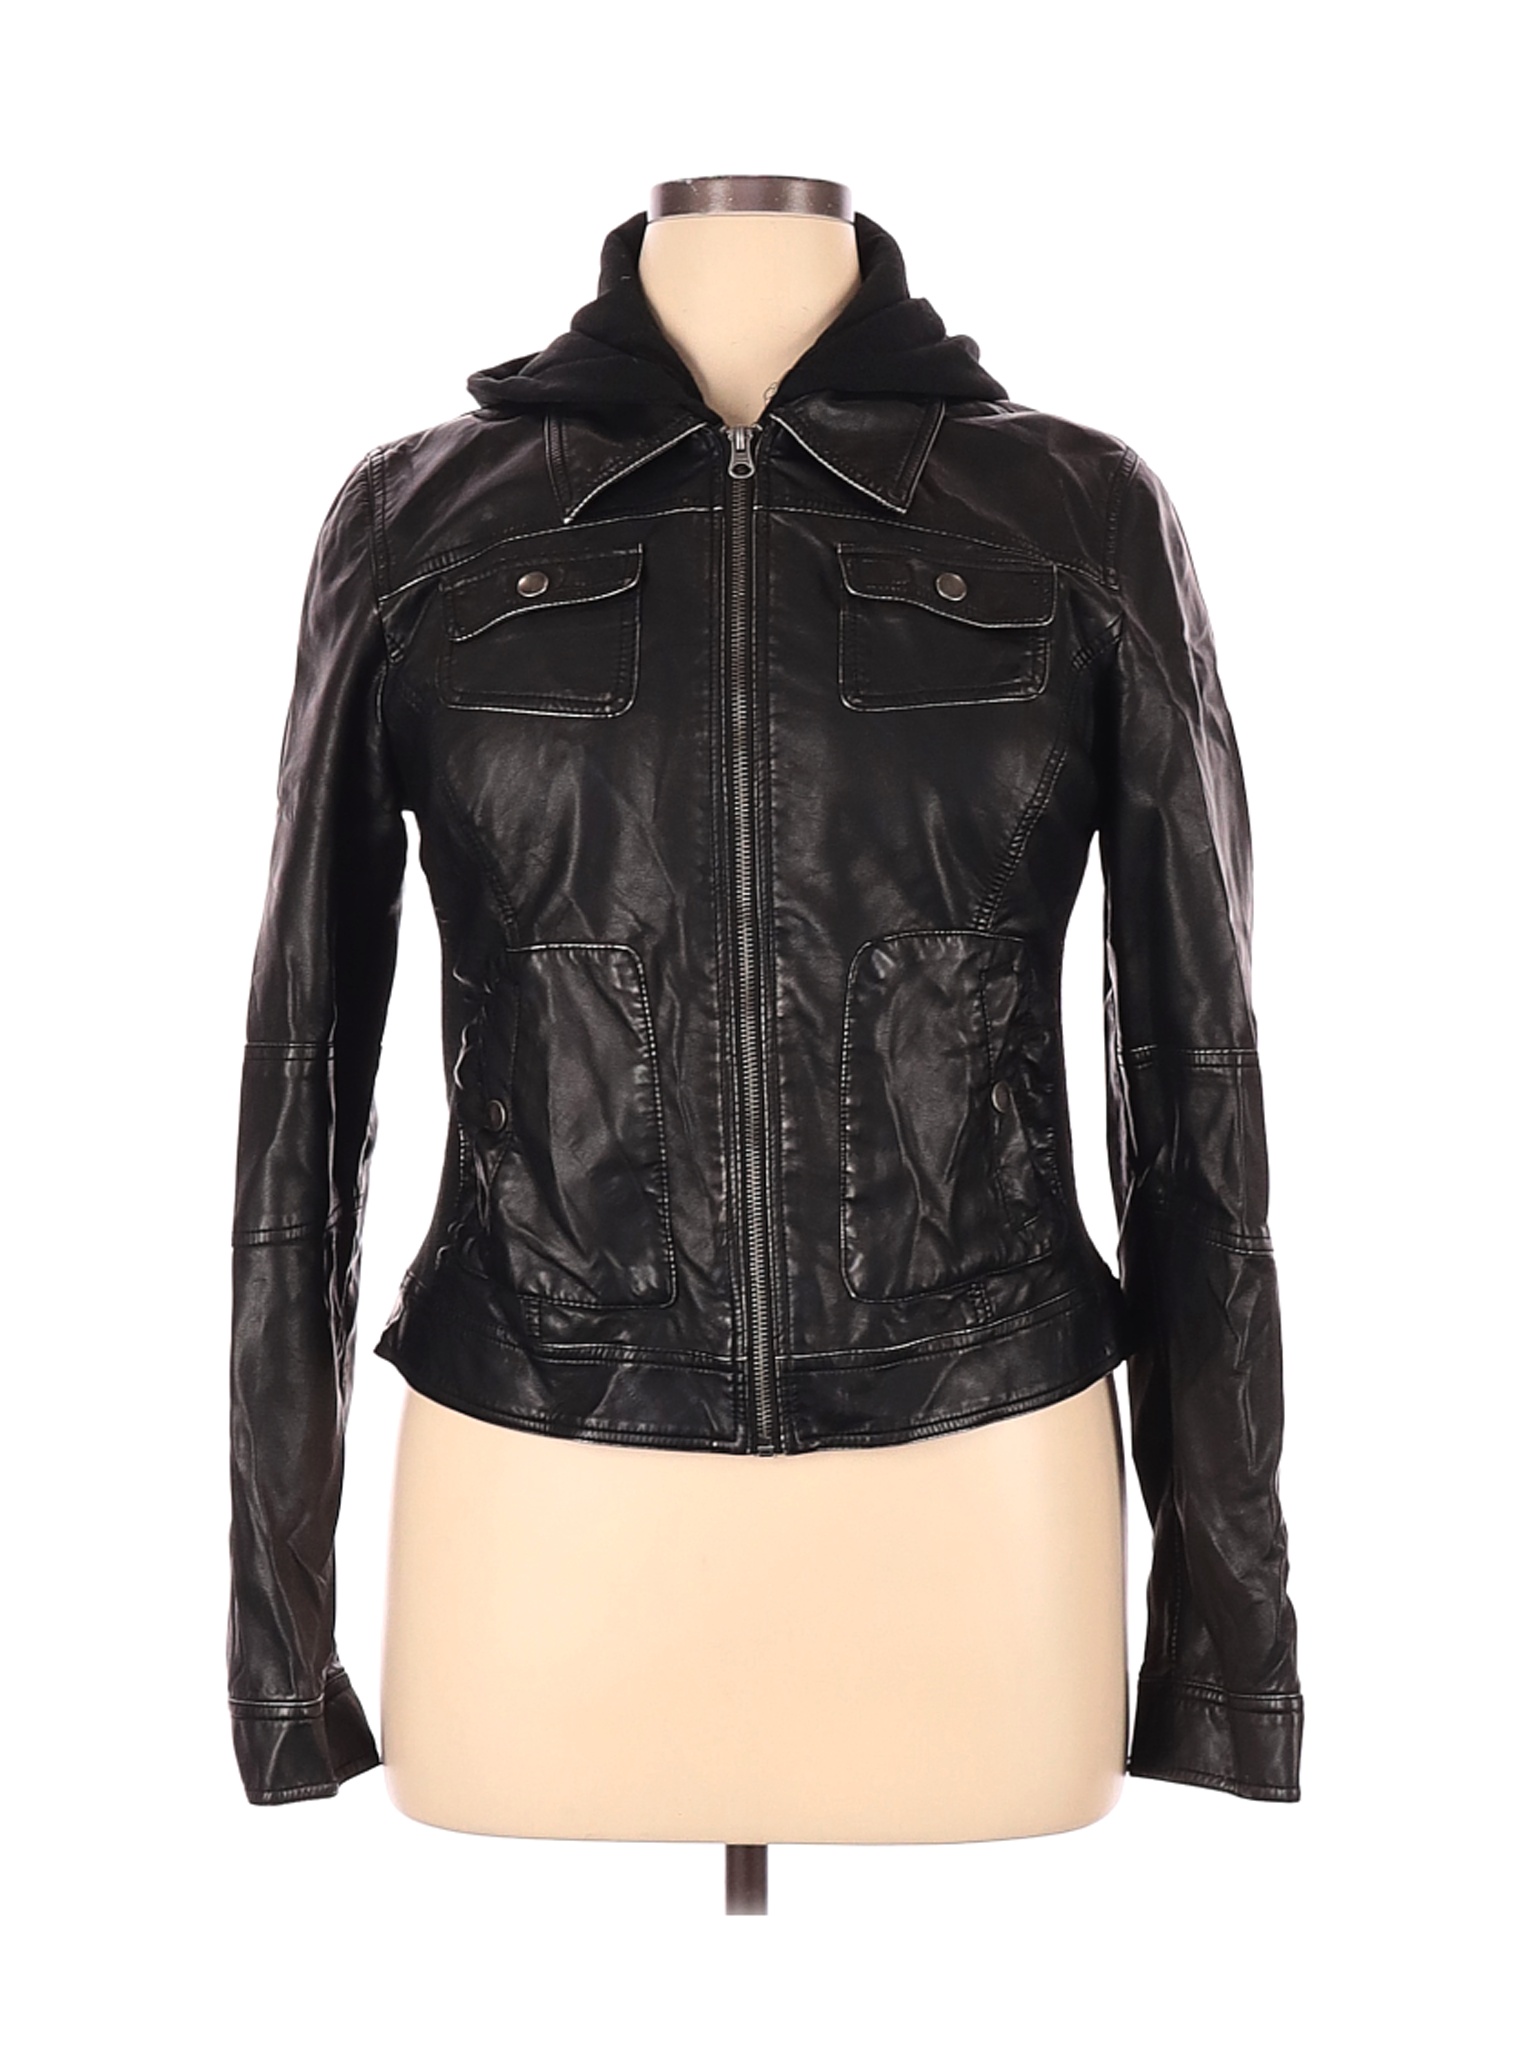 Maurices Women Black Faux Leather Jacket XL | eBay